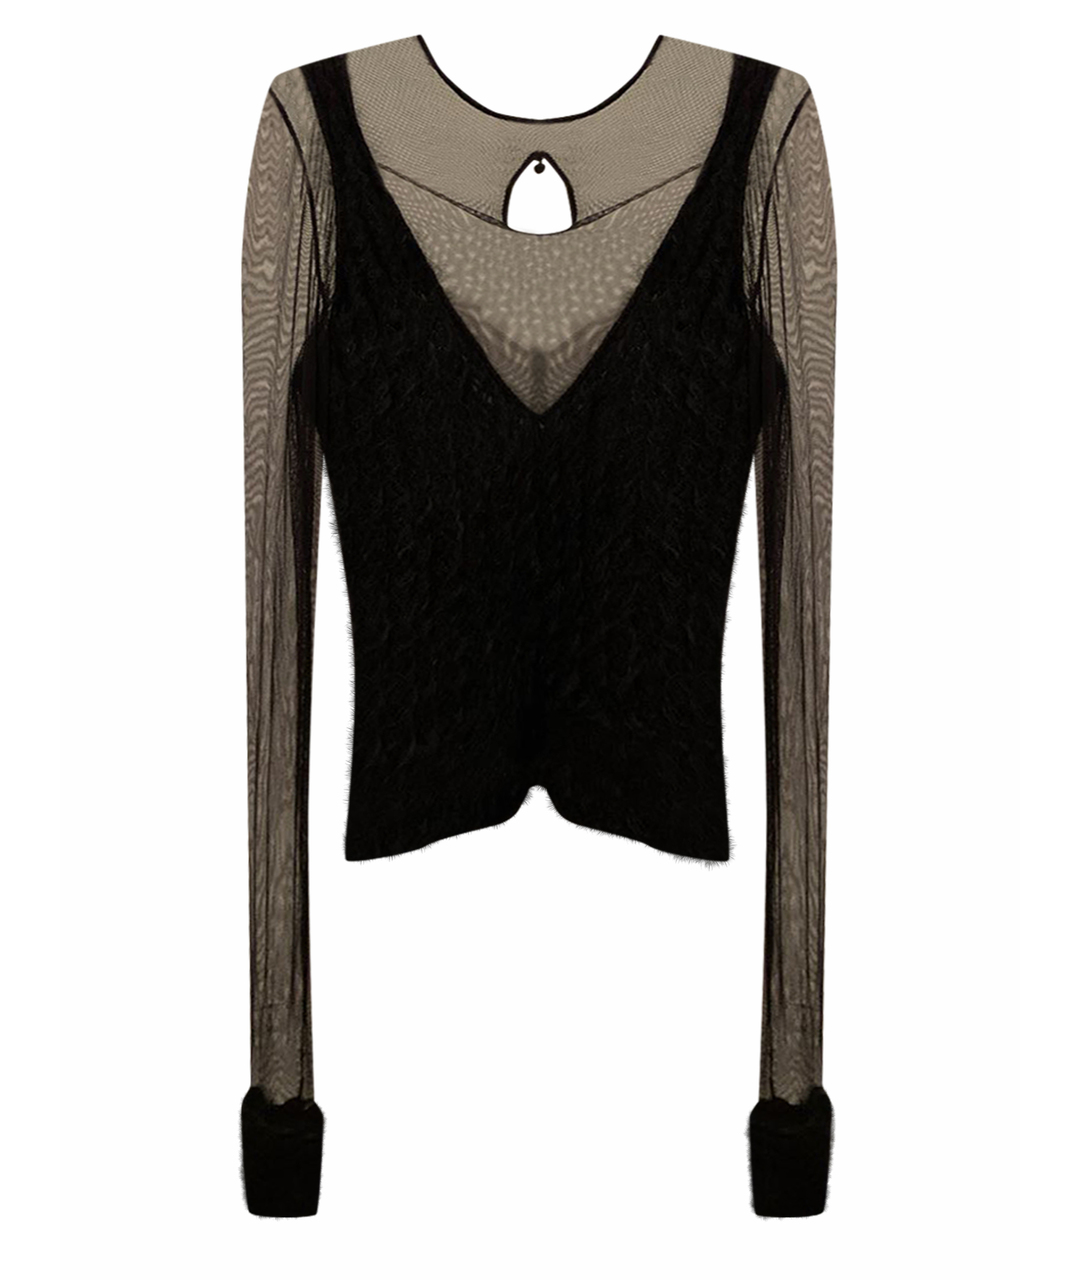 CHANEL PRE-OWNED Черный шерстяной джемпер / свитер, фото 1